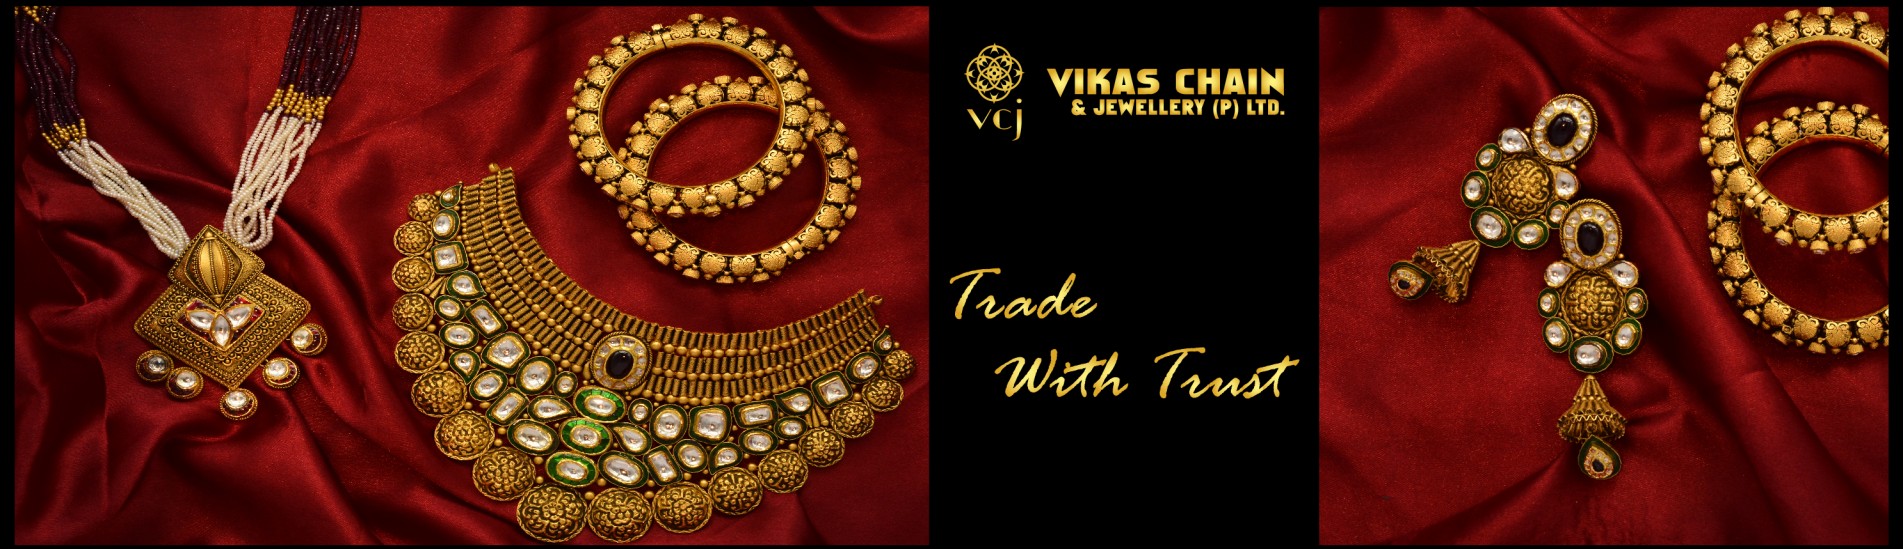 Vikas Chain & Jewellery